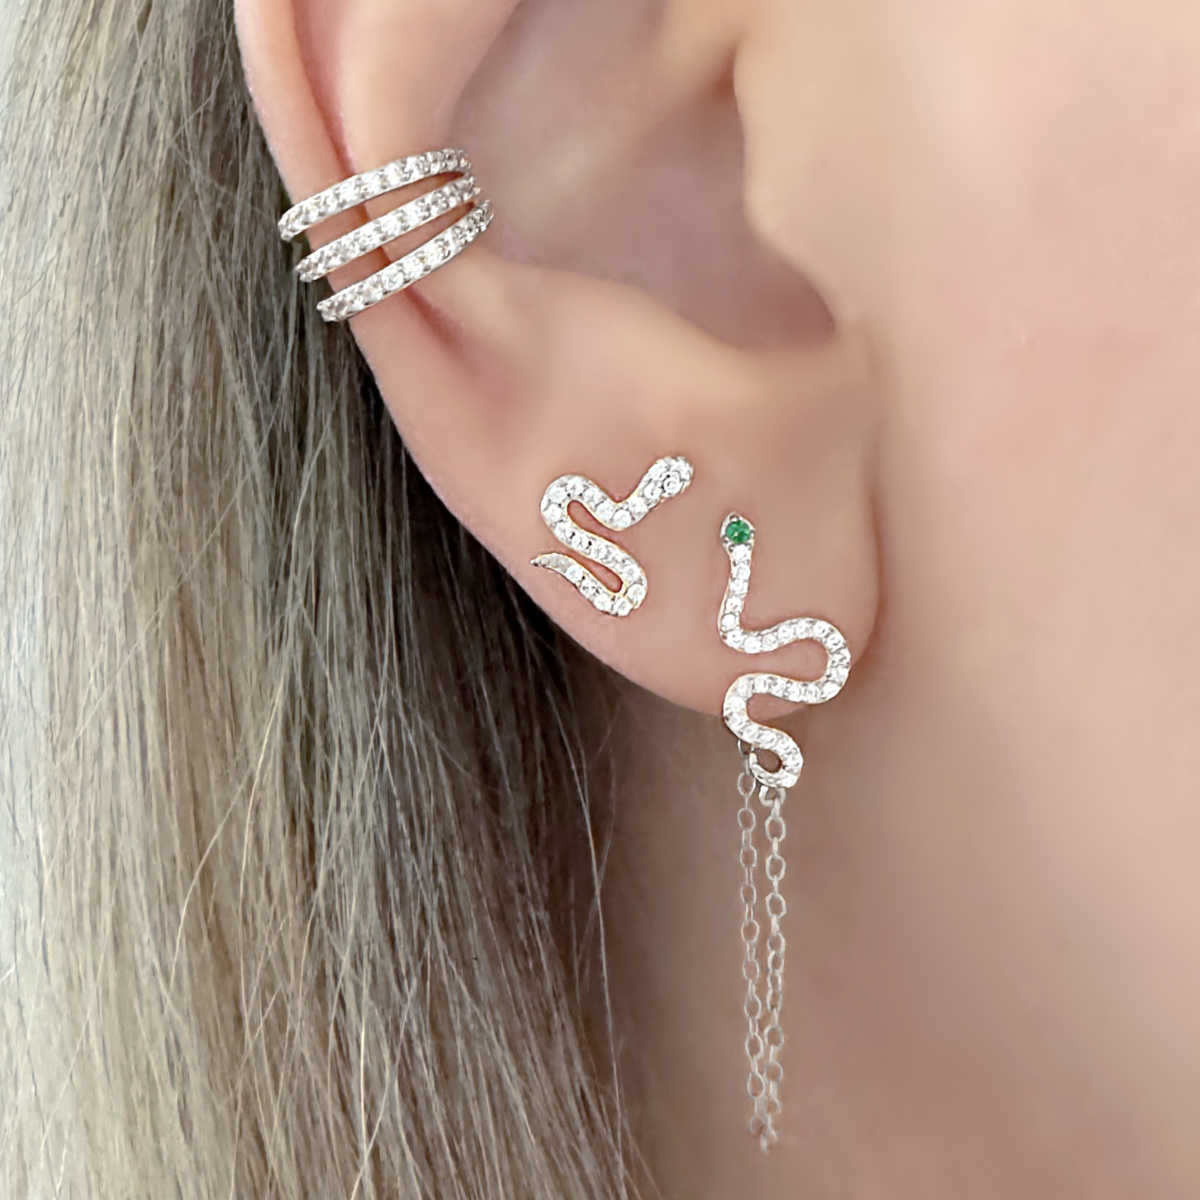 Snake Stud Earrings with Gemstones in 18k White Gold & Silver on Model